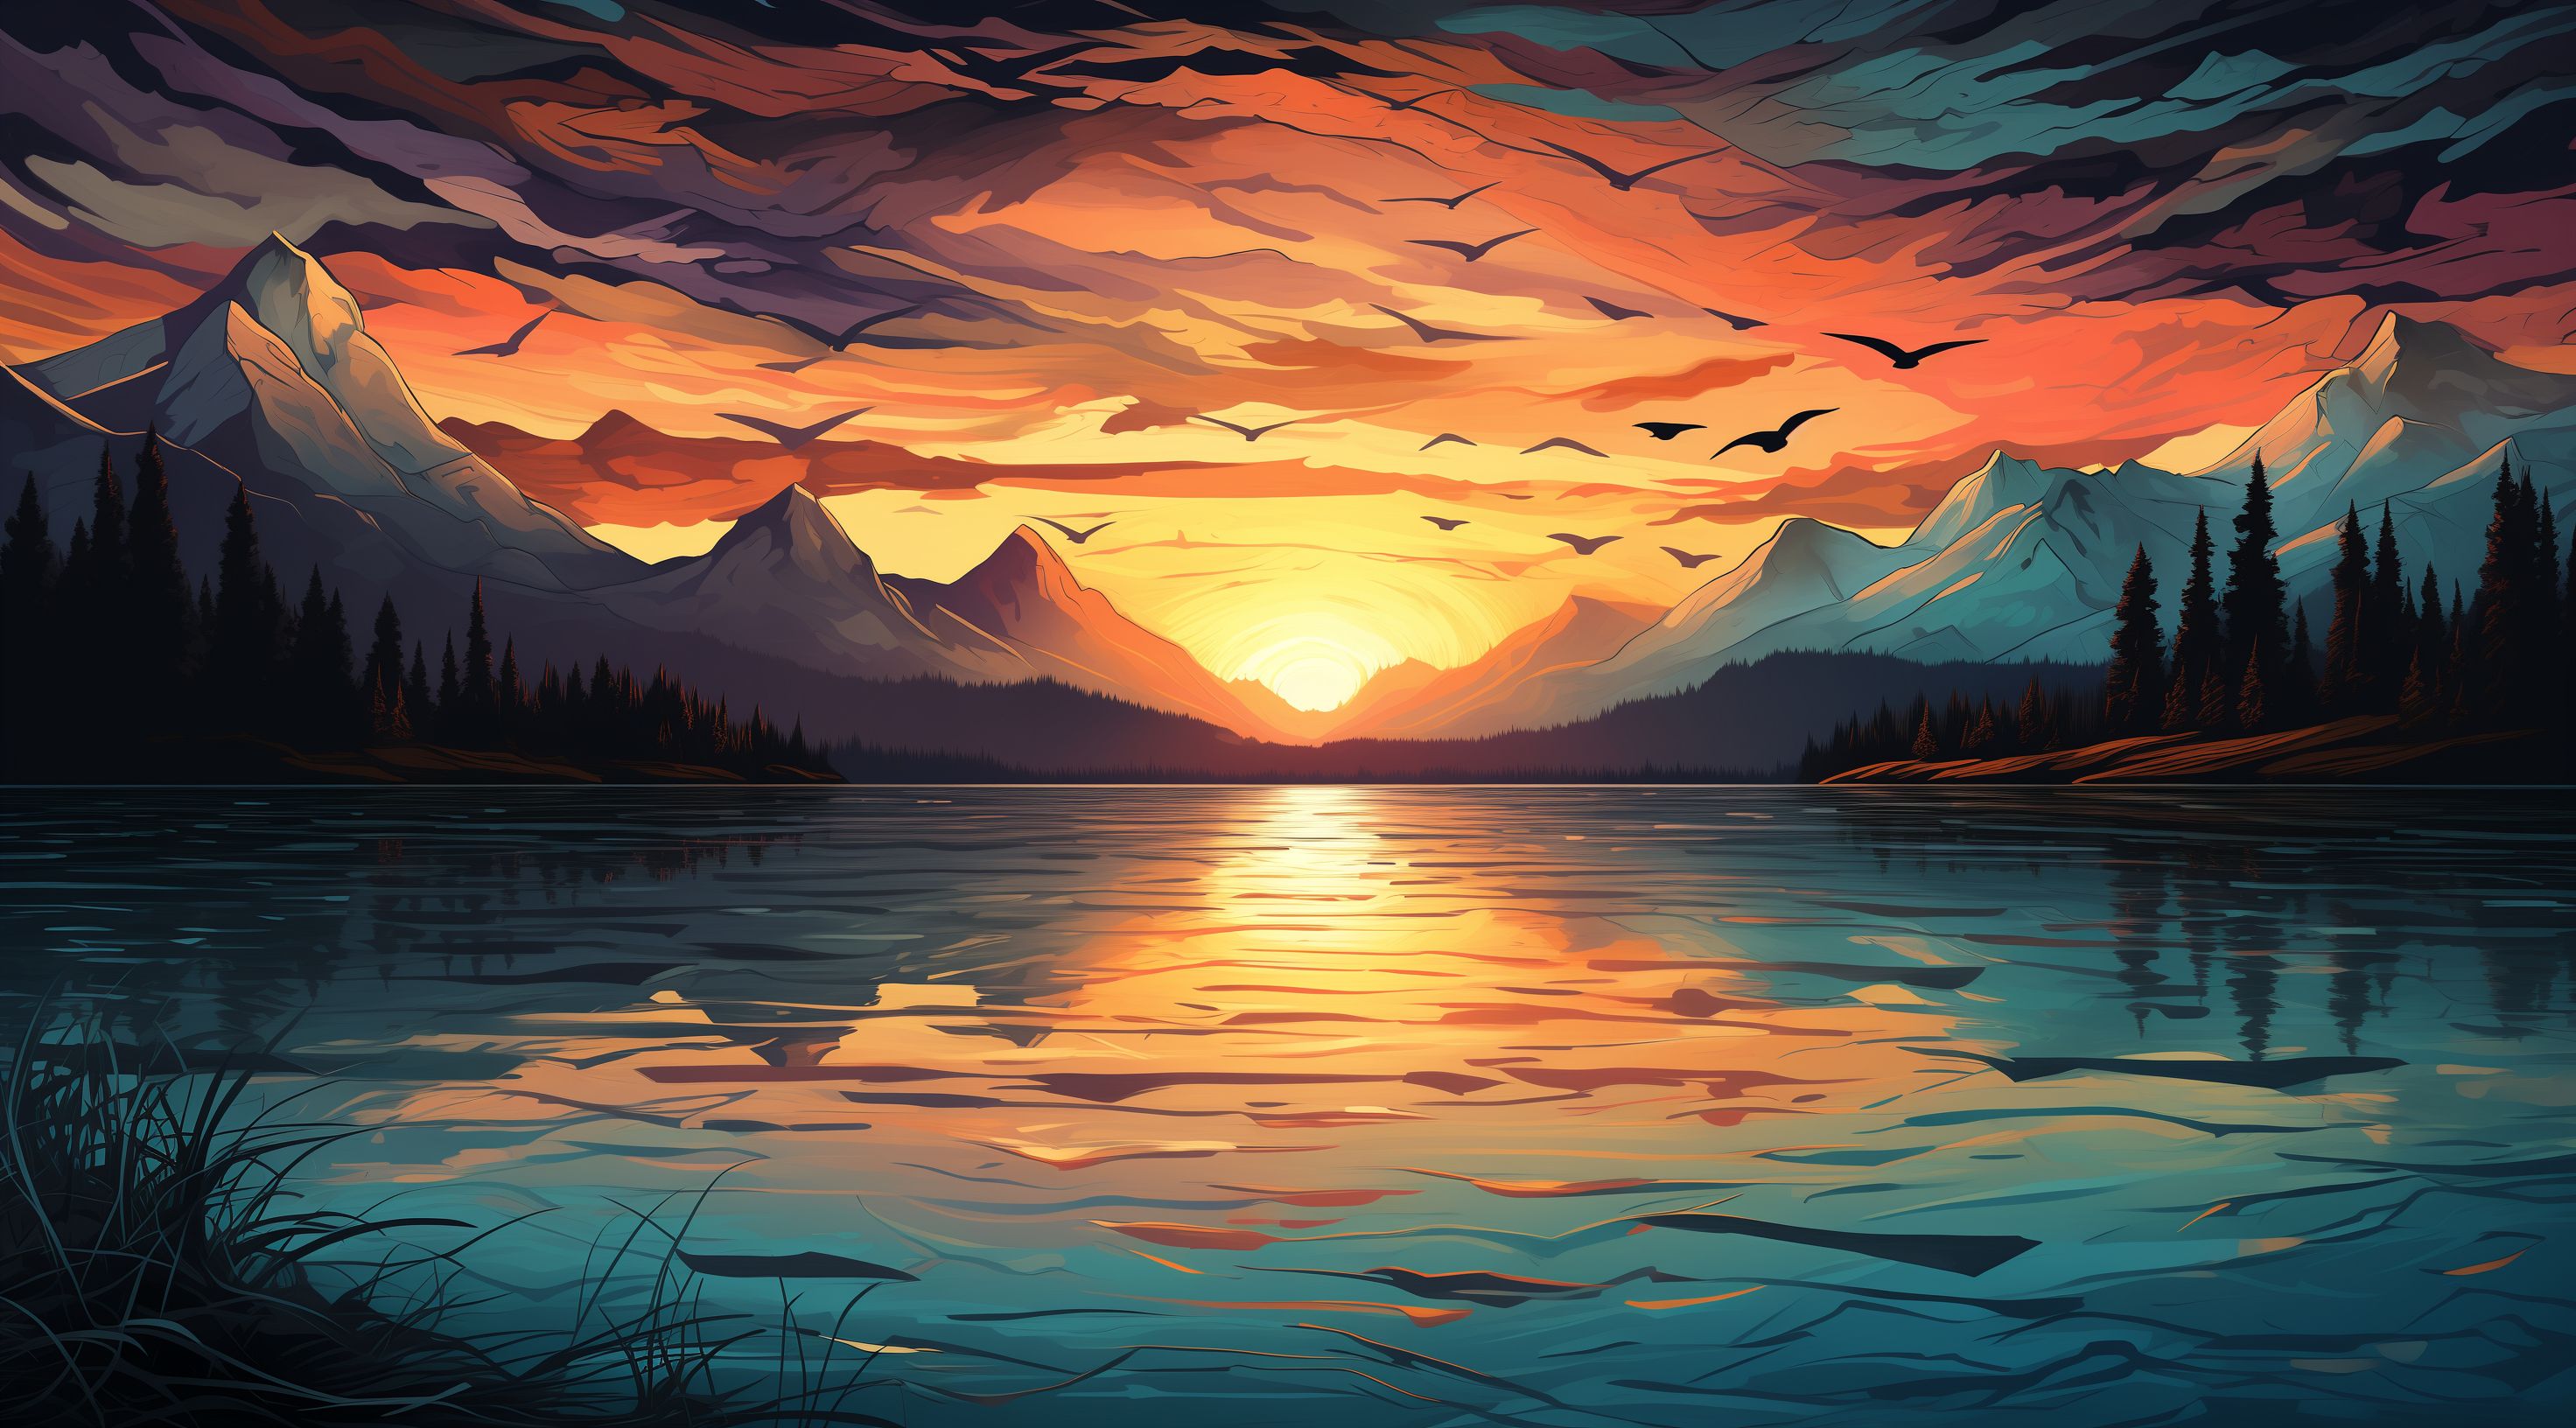 Mountain Lake HD Twilight Aesthetic Wallpaper, HD Artist 4K Wallpaper, Image and Background